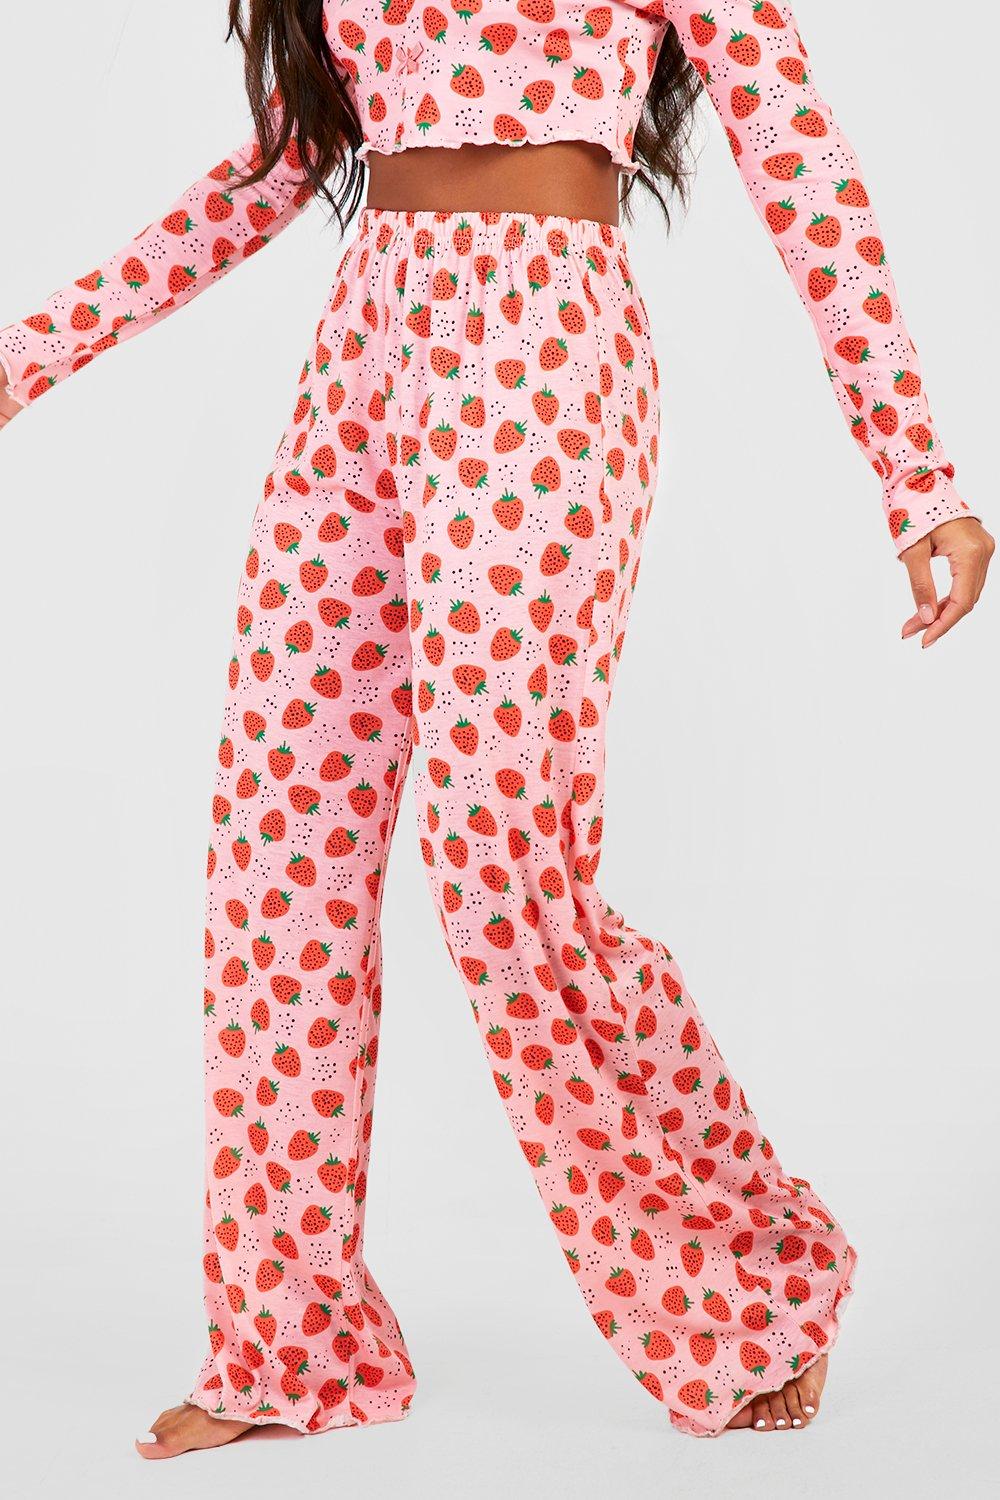 Joy Flannel Pyjamas, Star Print Pyjamas, Amber Star pink/red